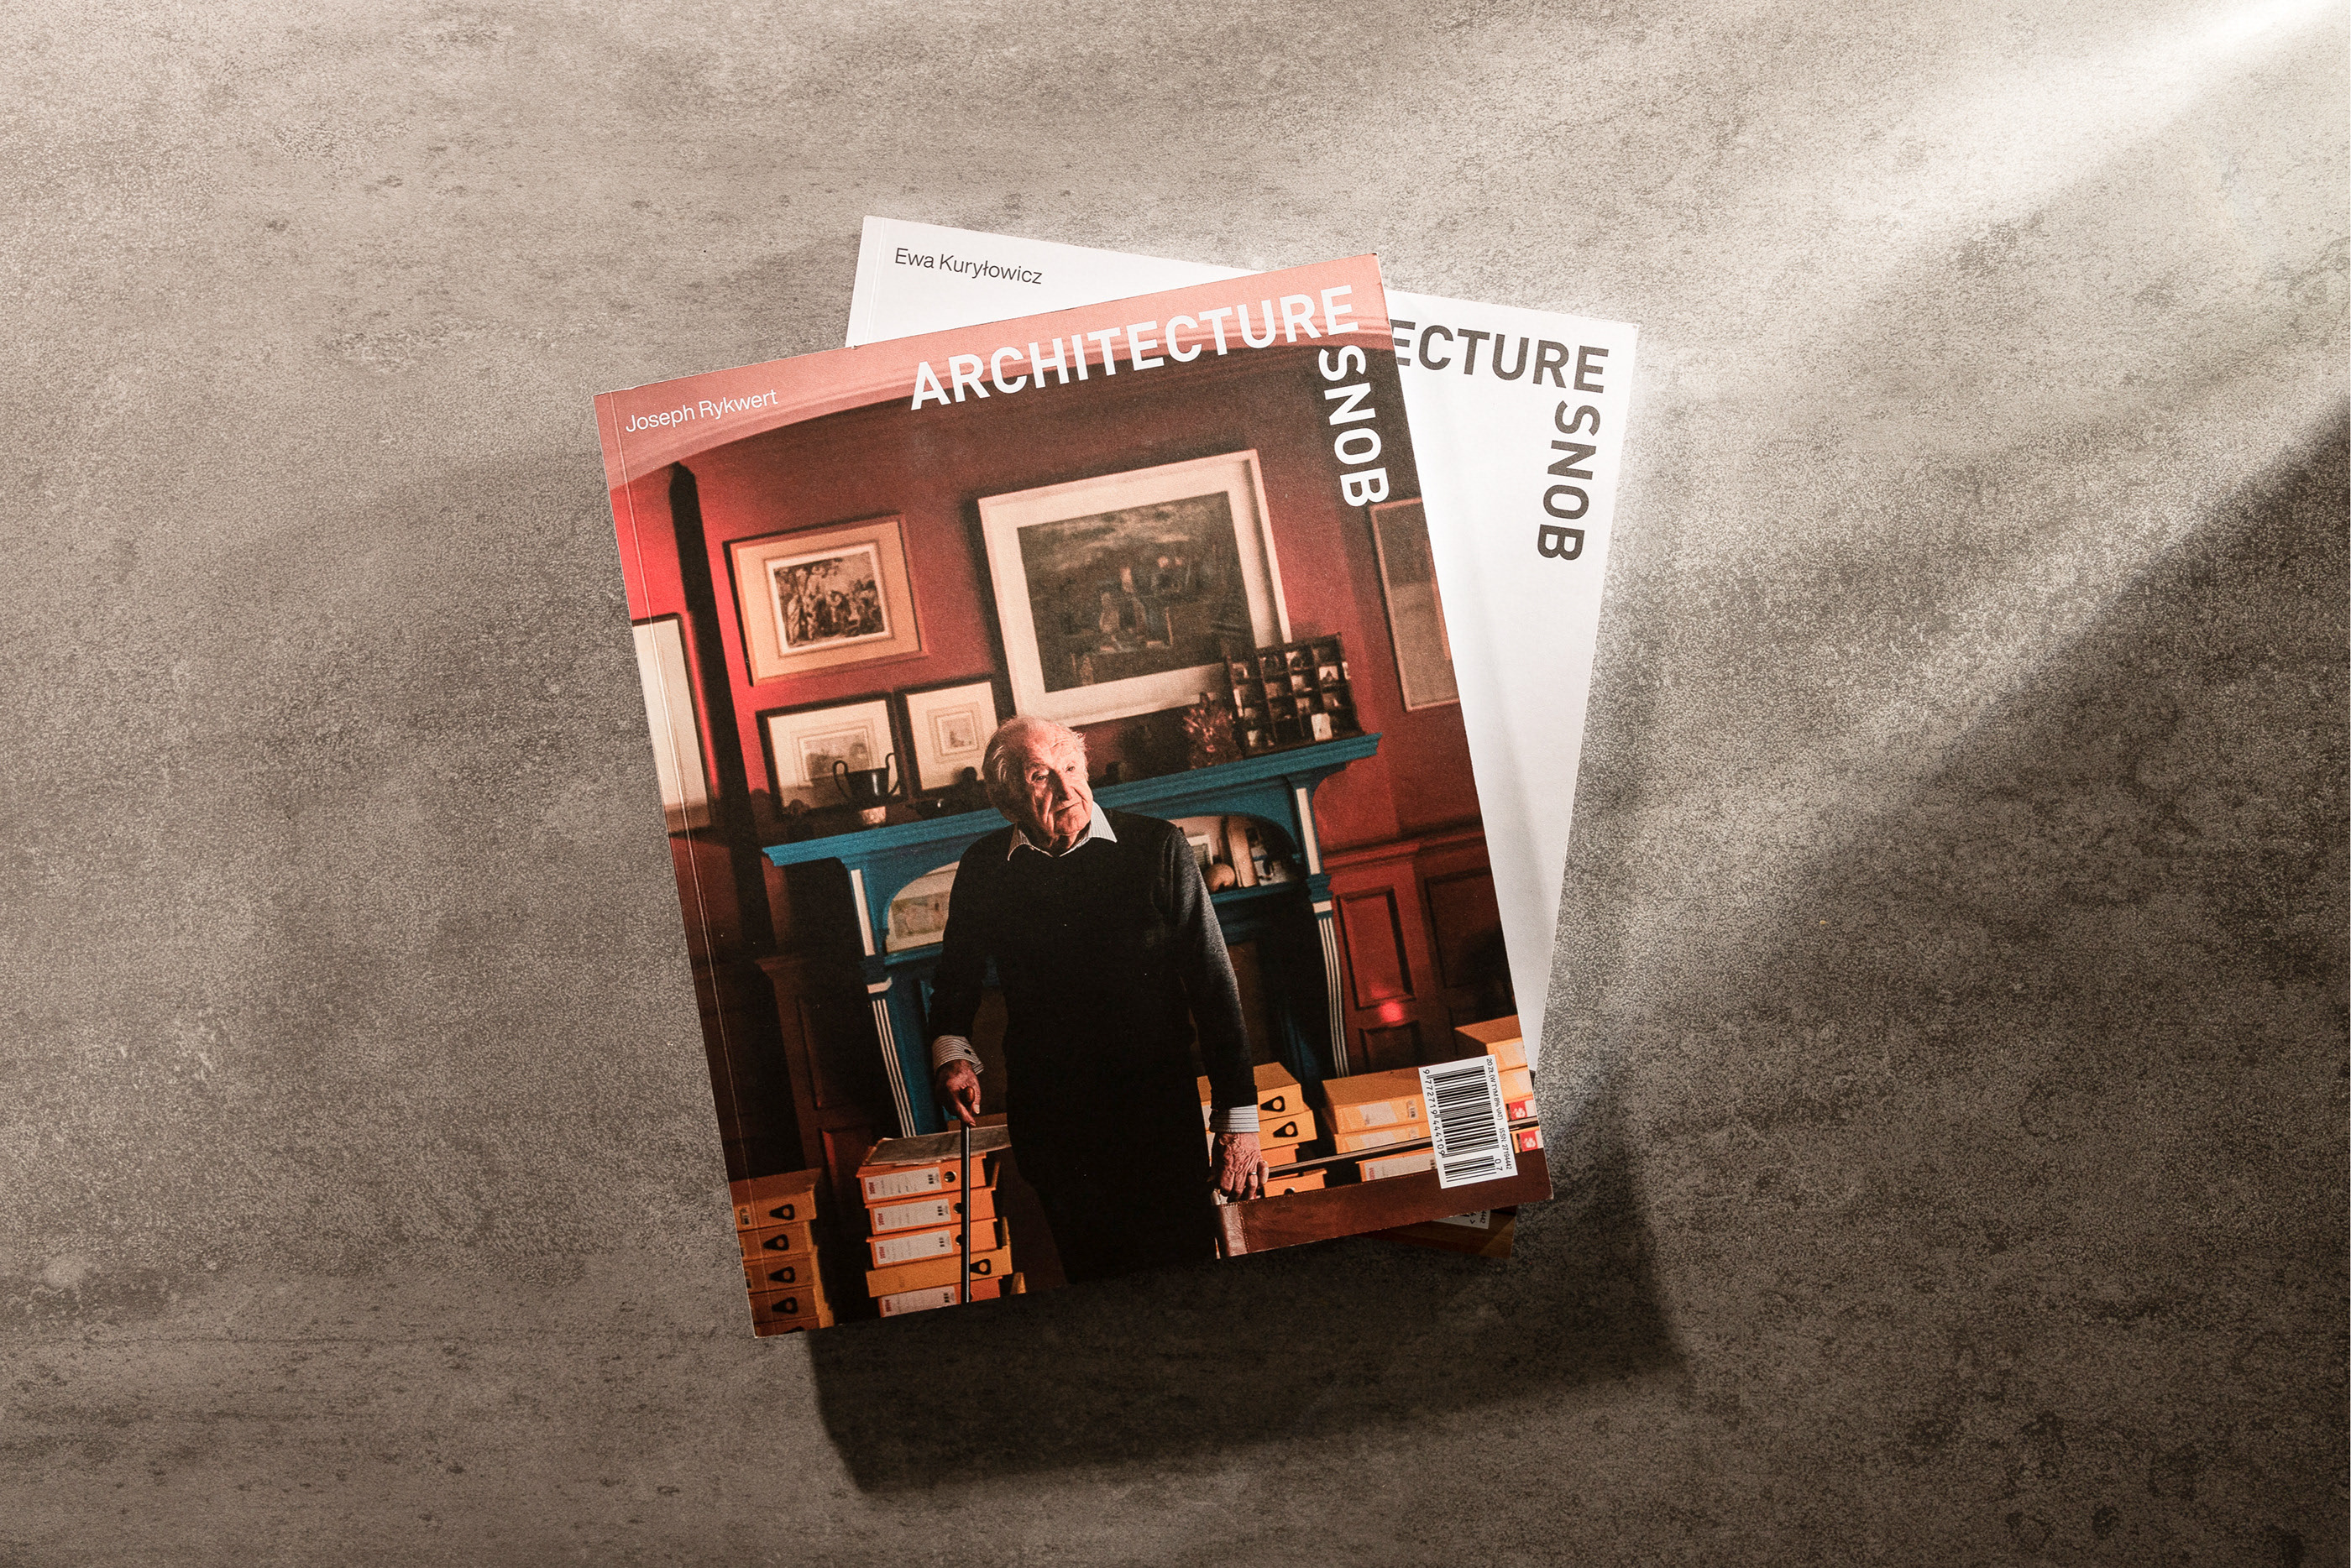 Architecture Snob杂志排版设计